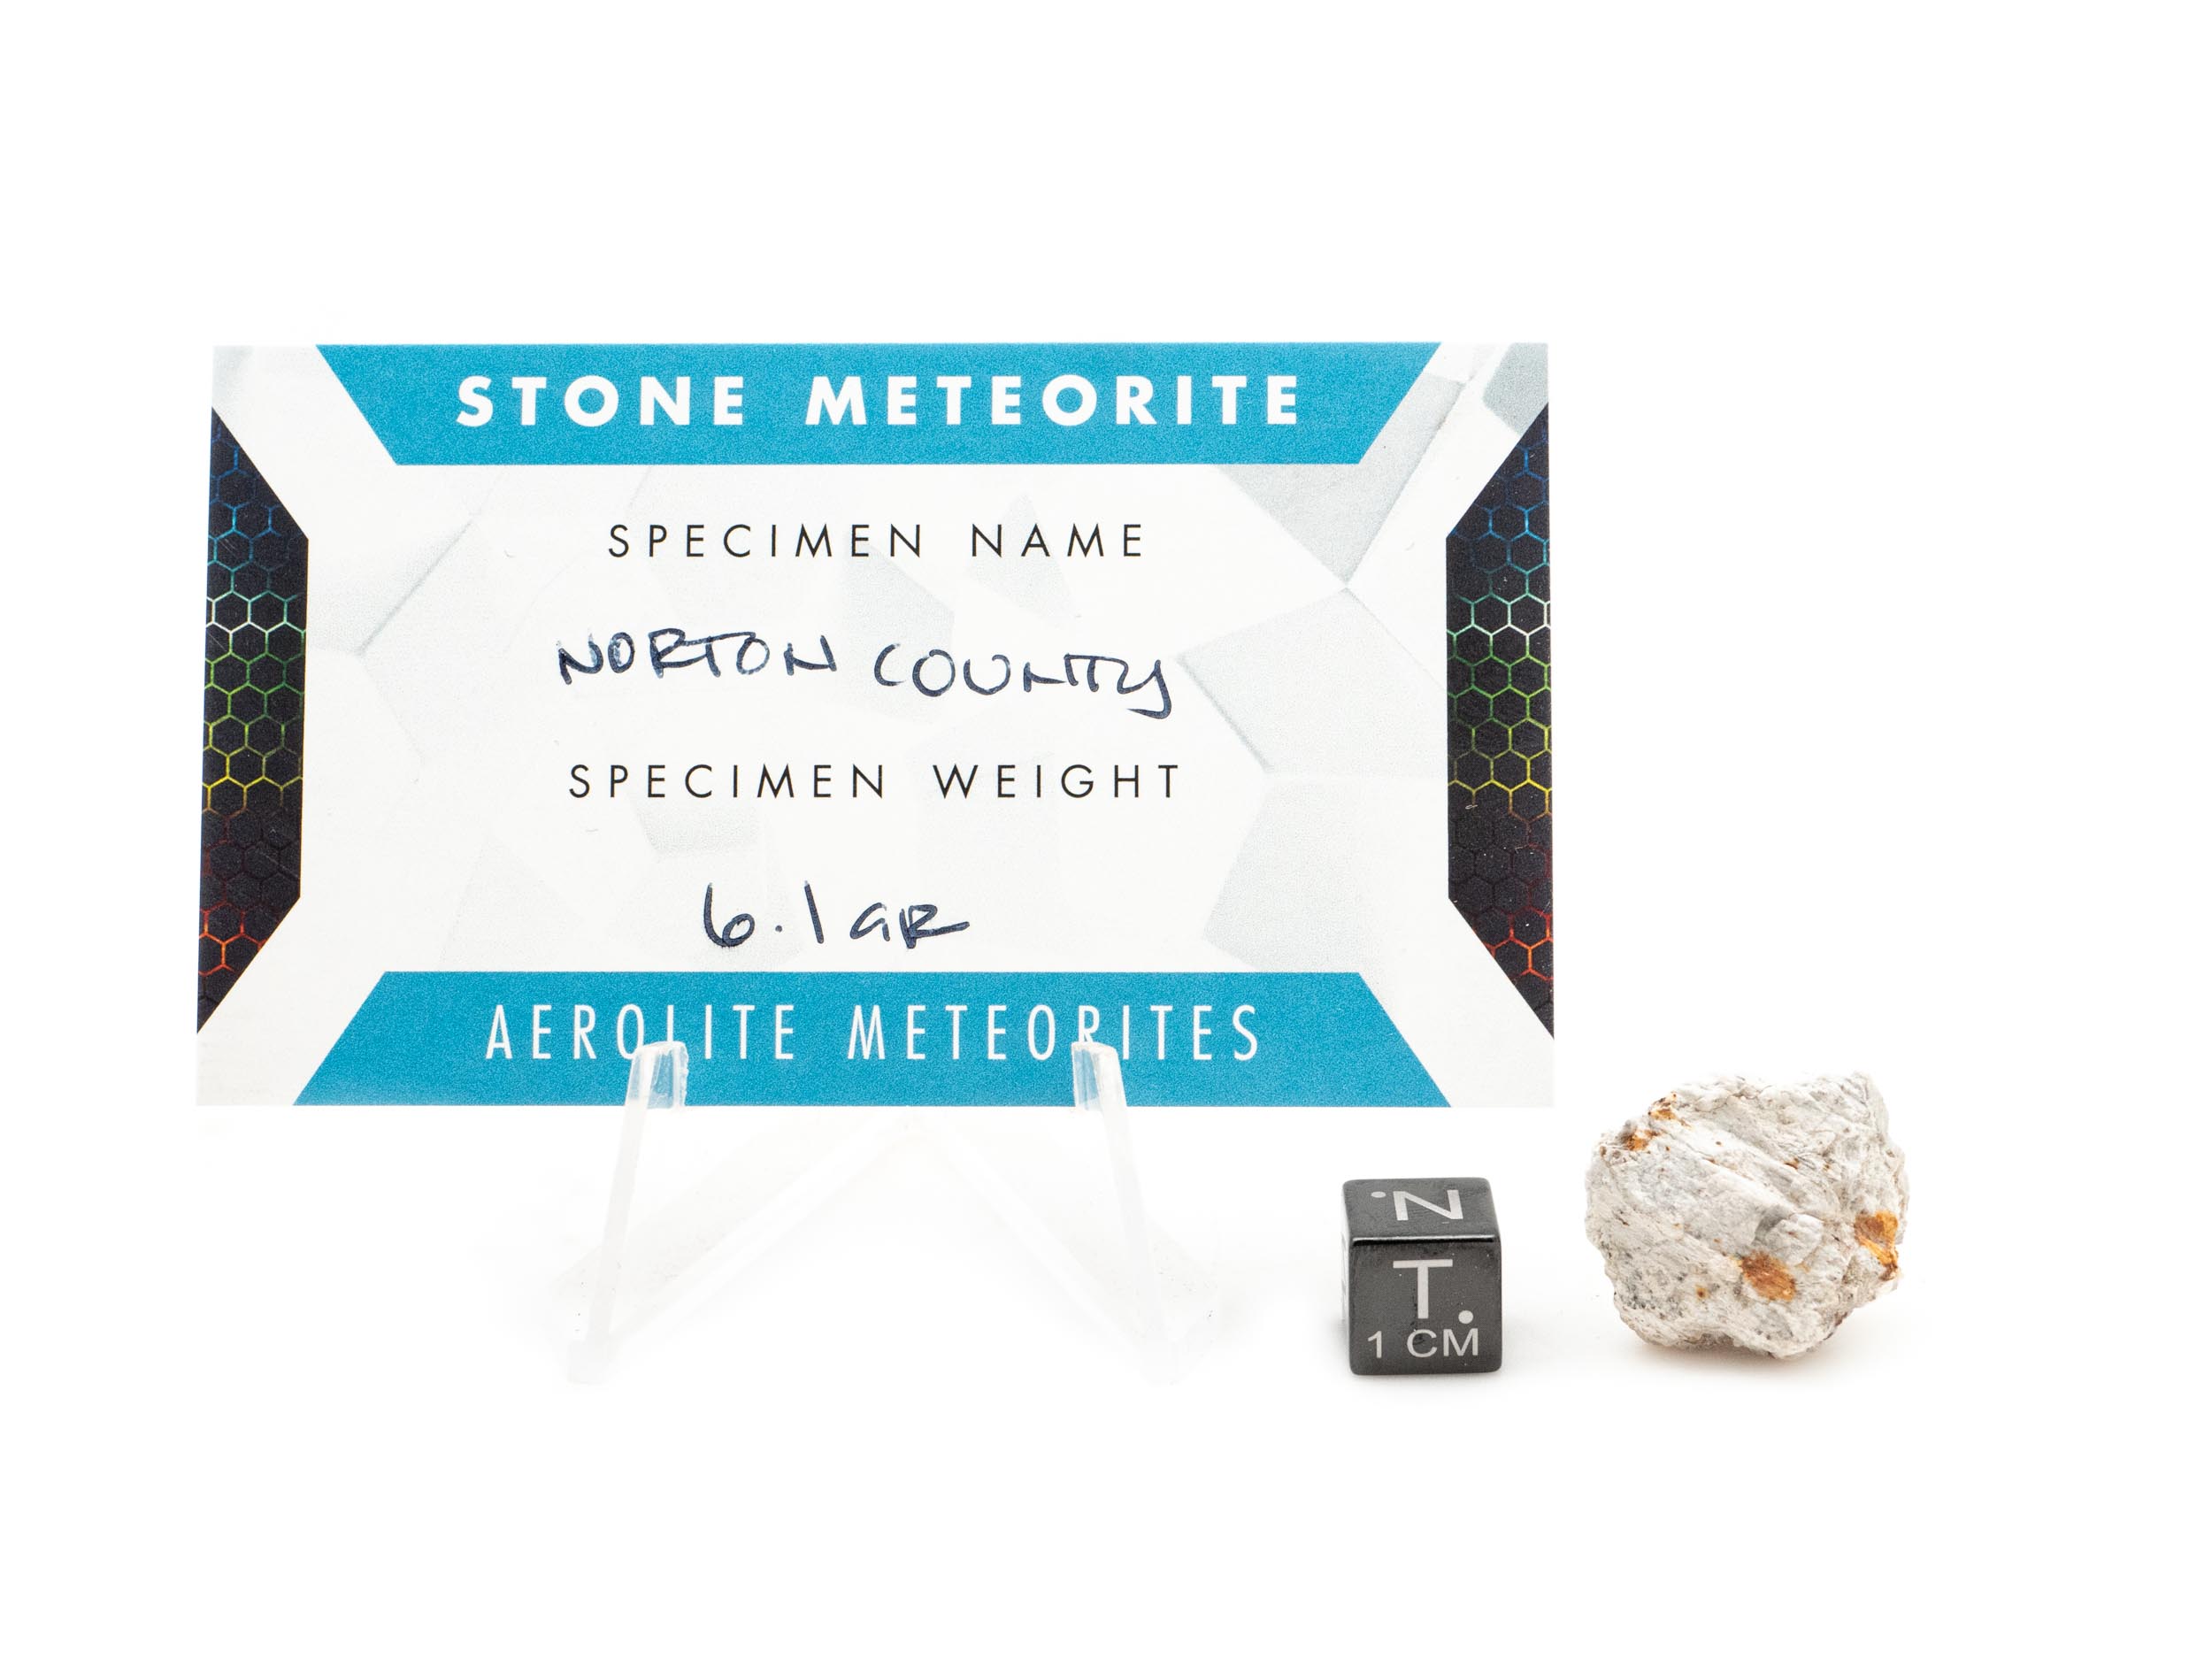 Meteorite label Norton County